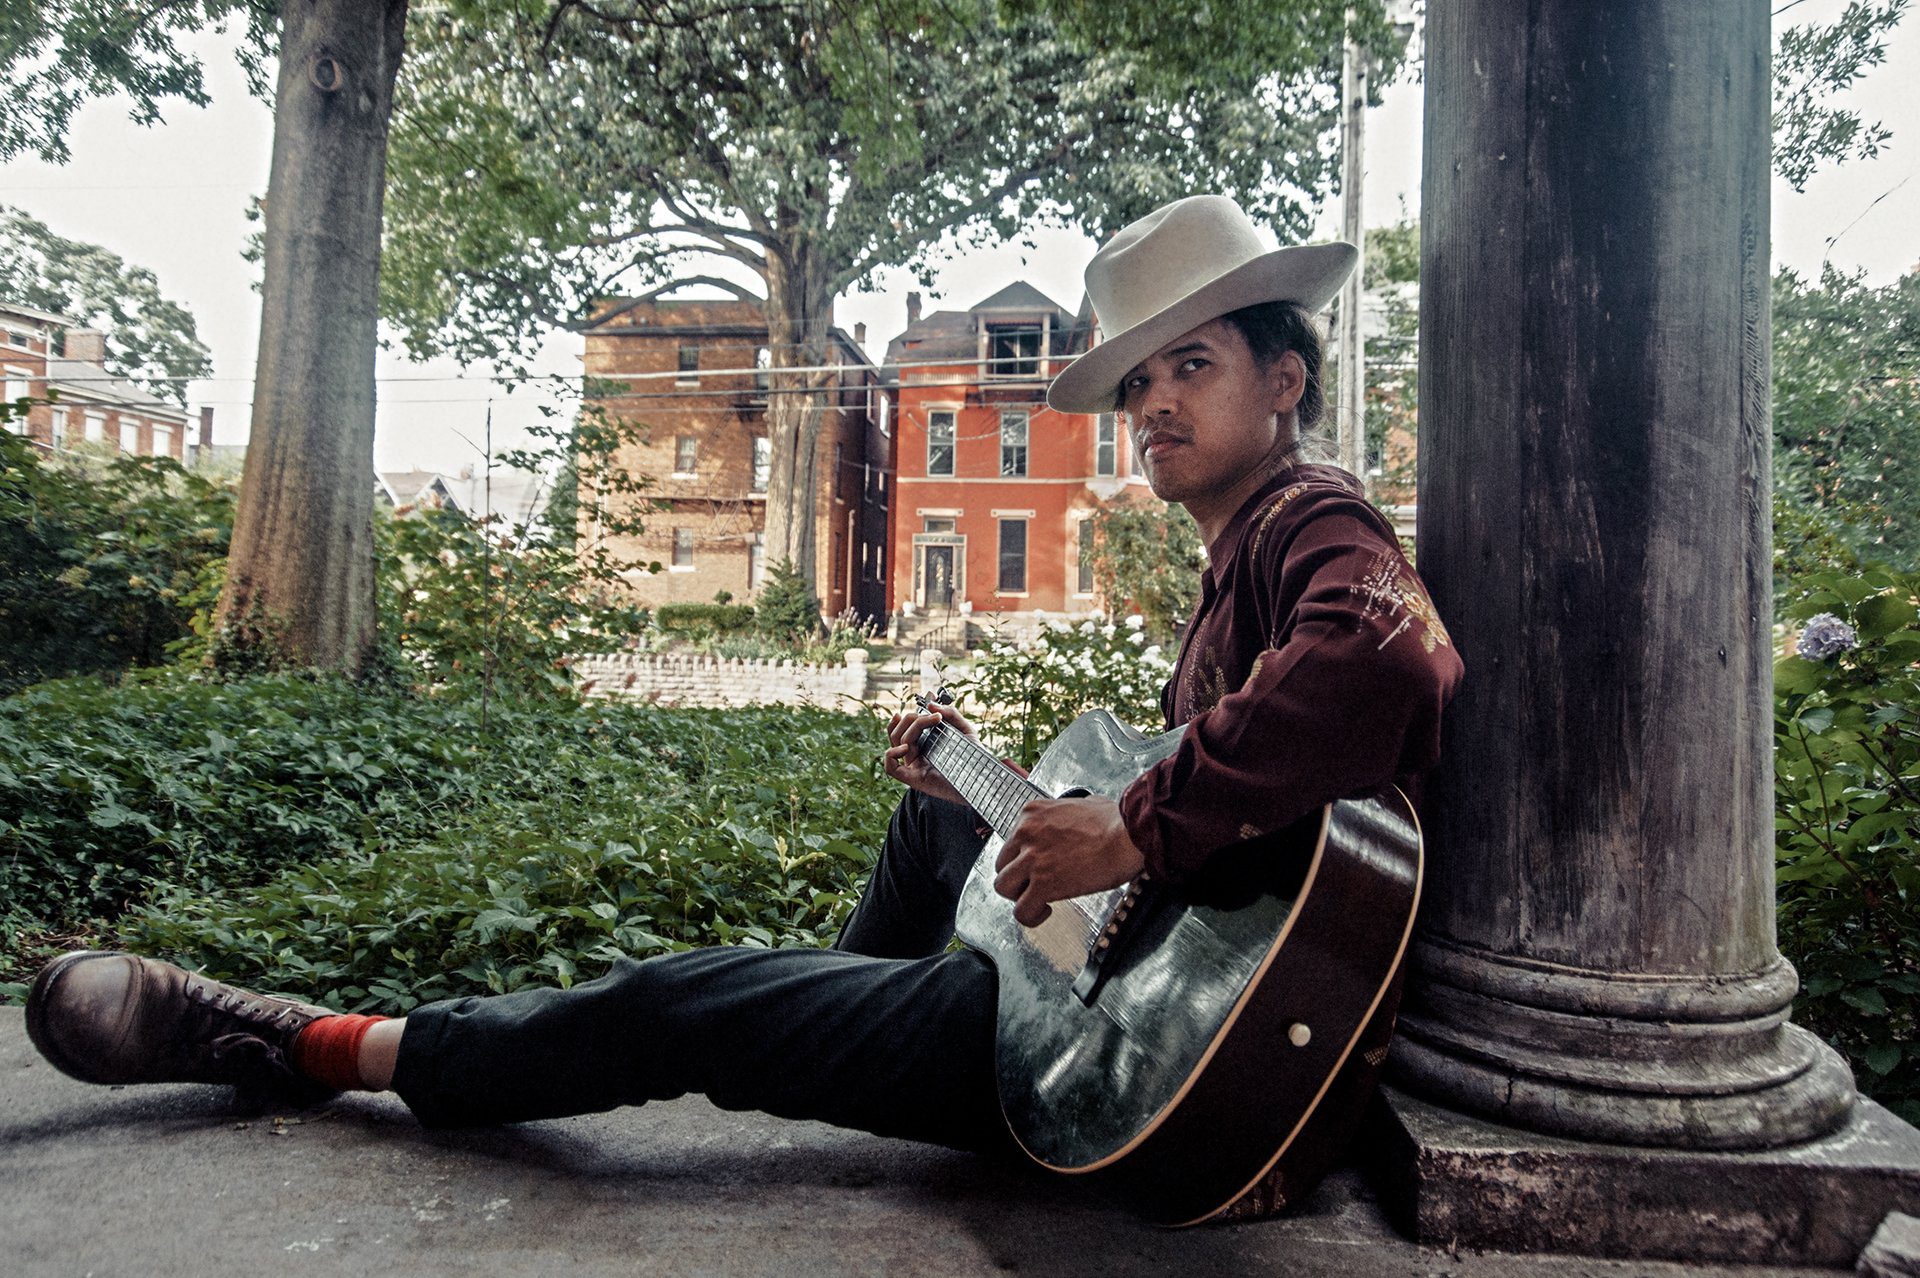 Nat Myers leans against a building column and strums an acoustic guitar